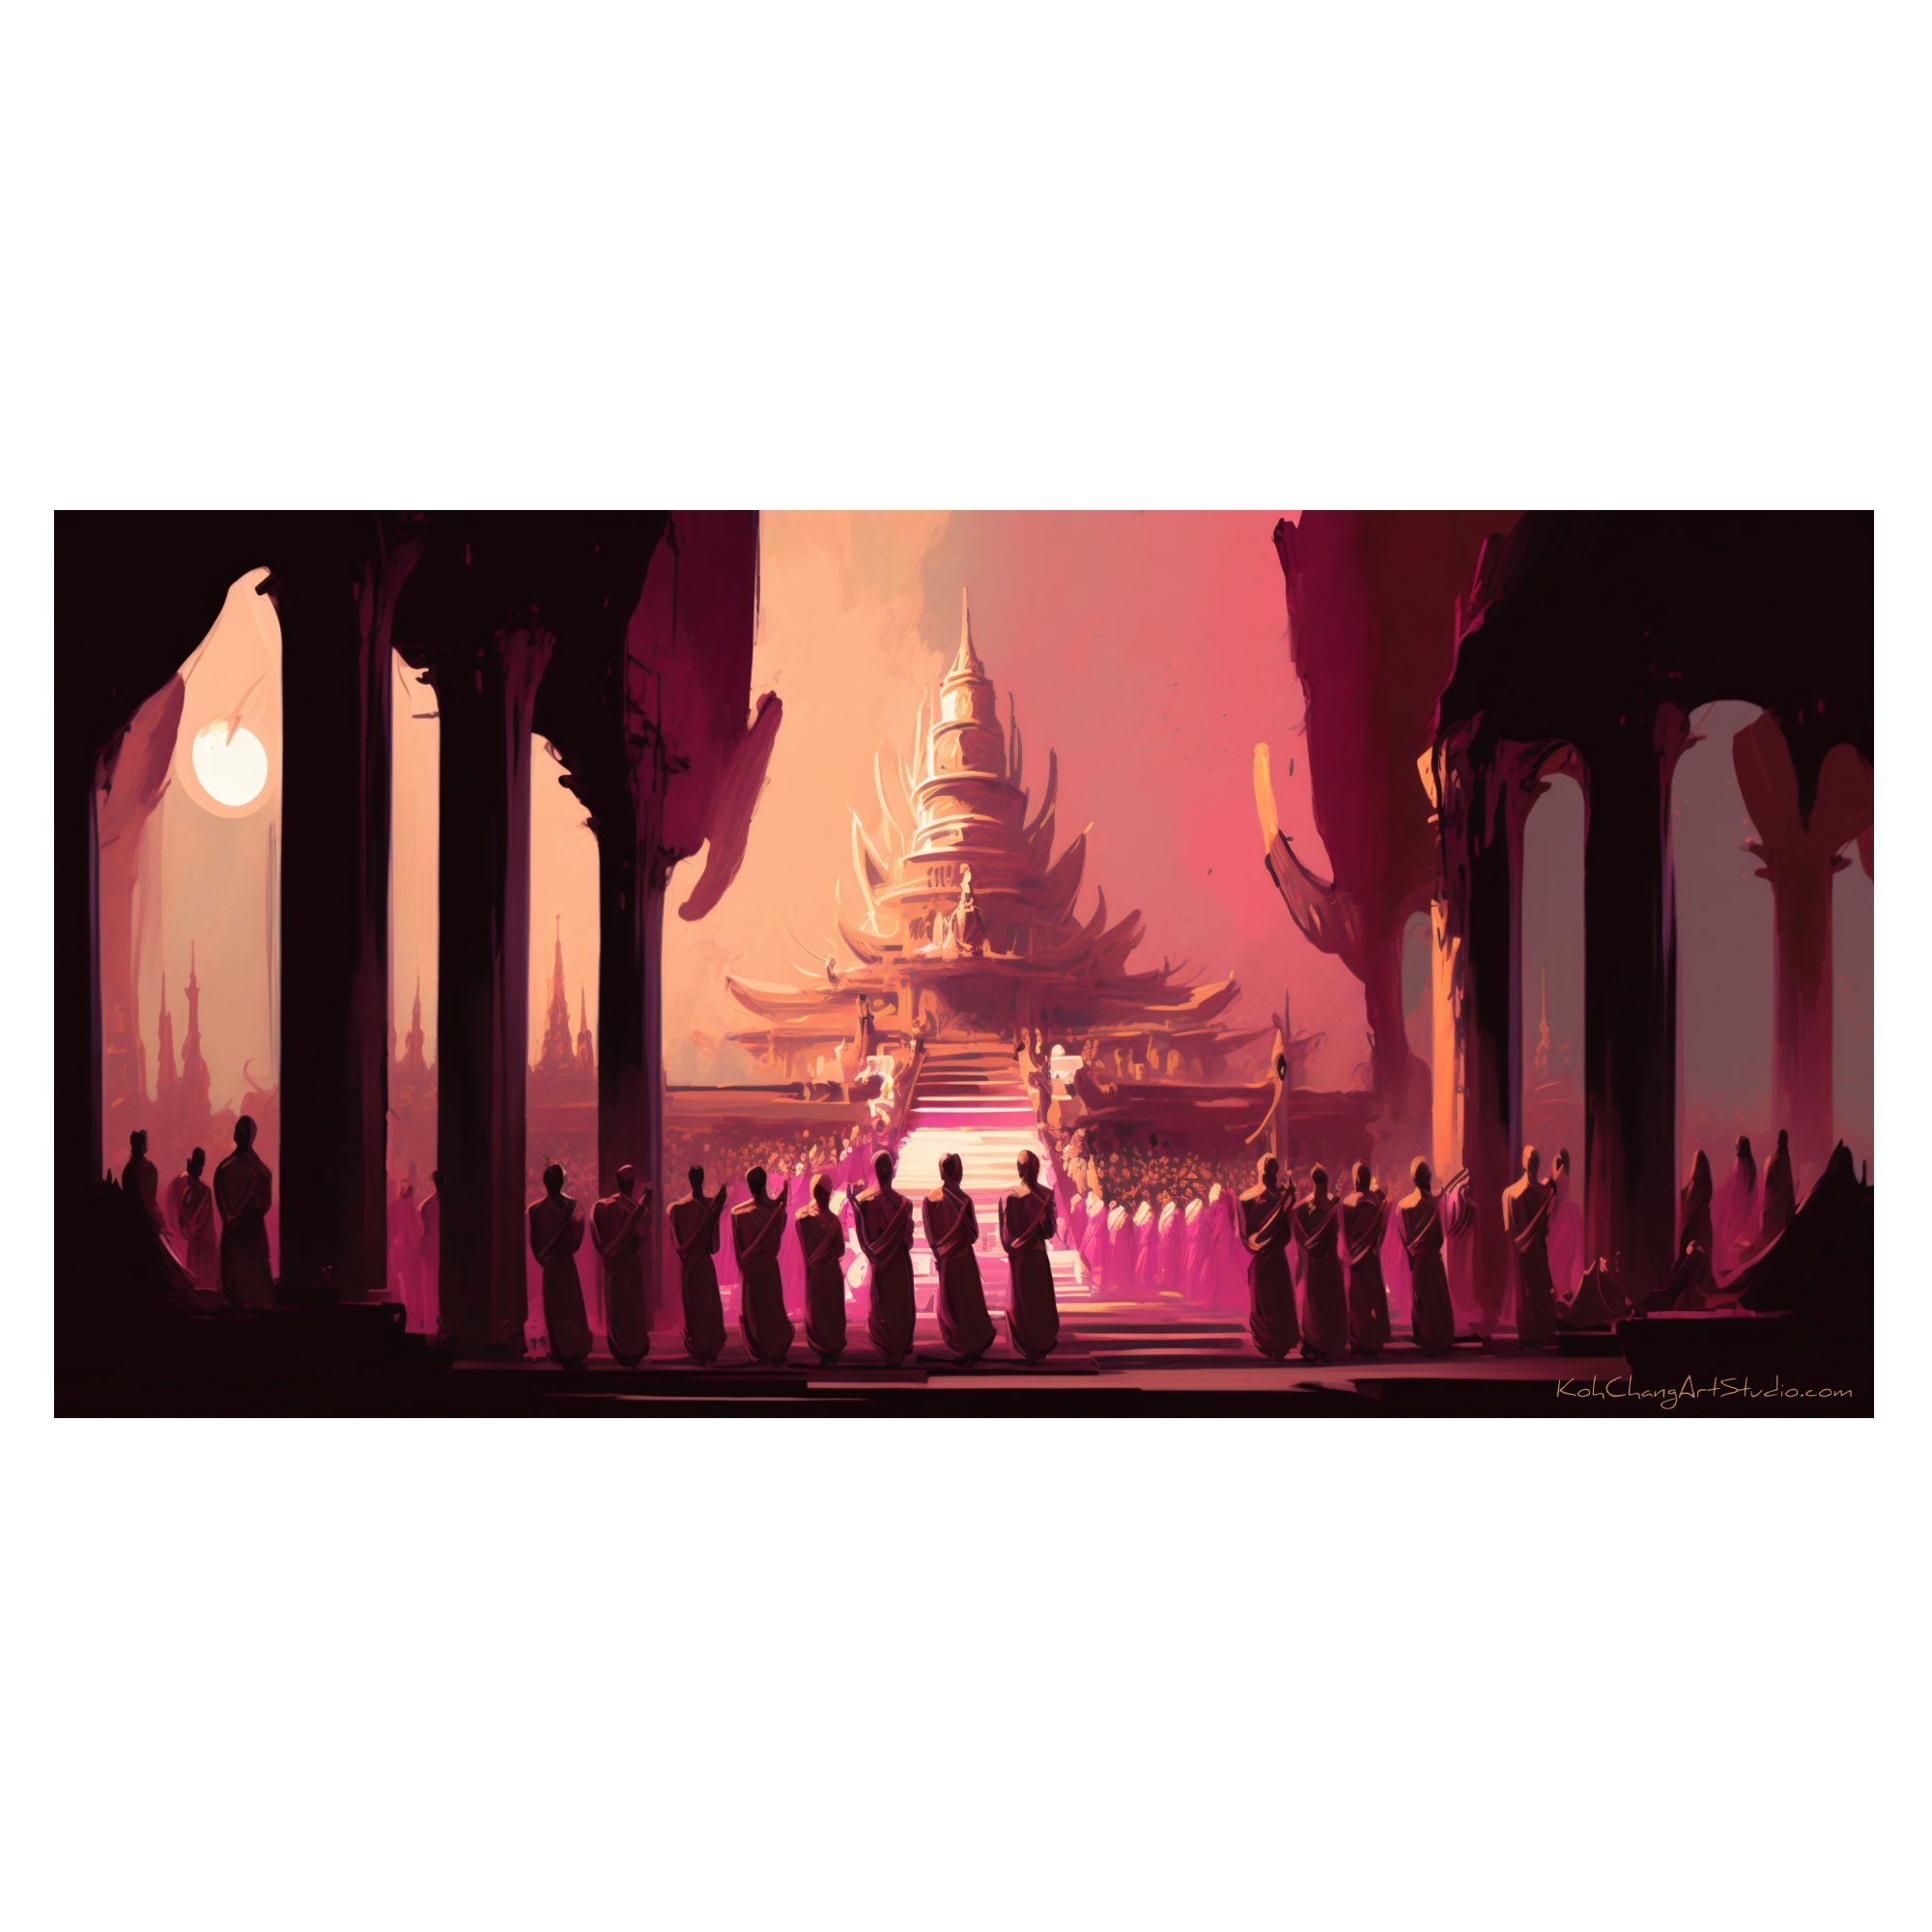 BUDDHA’S BRIDGE Image - Scene evoking awe, magnified by the temple's grandeur.